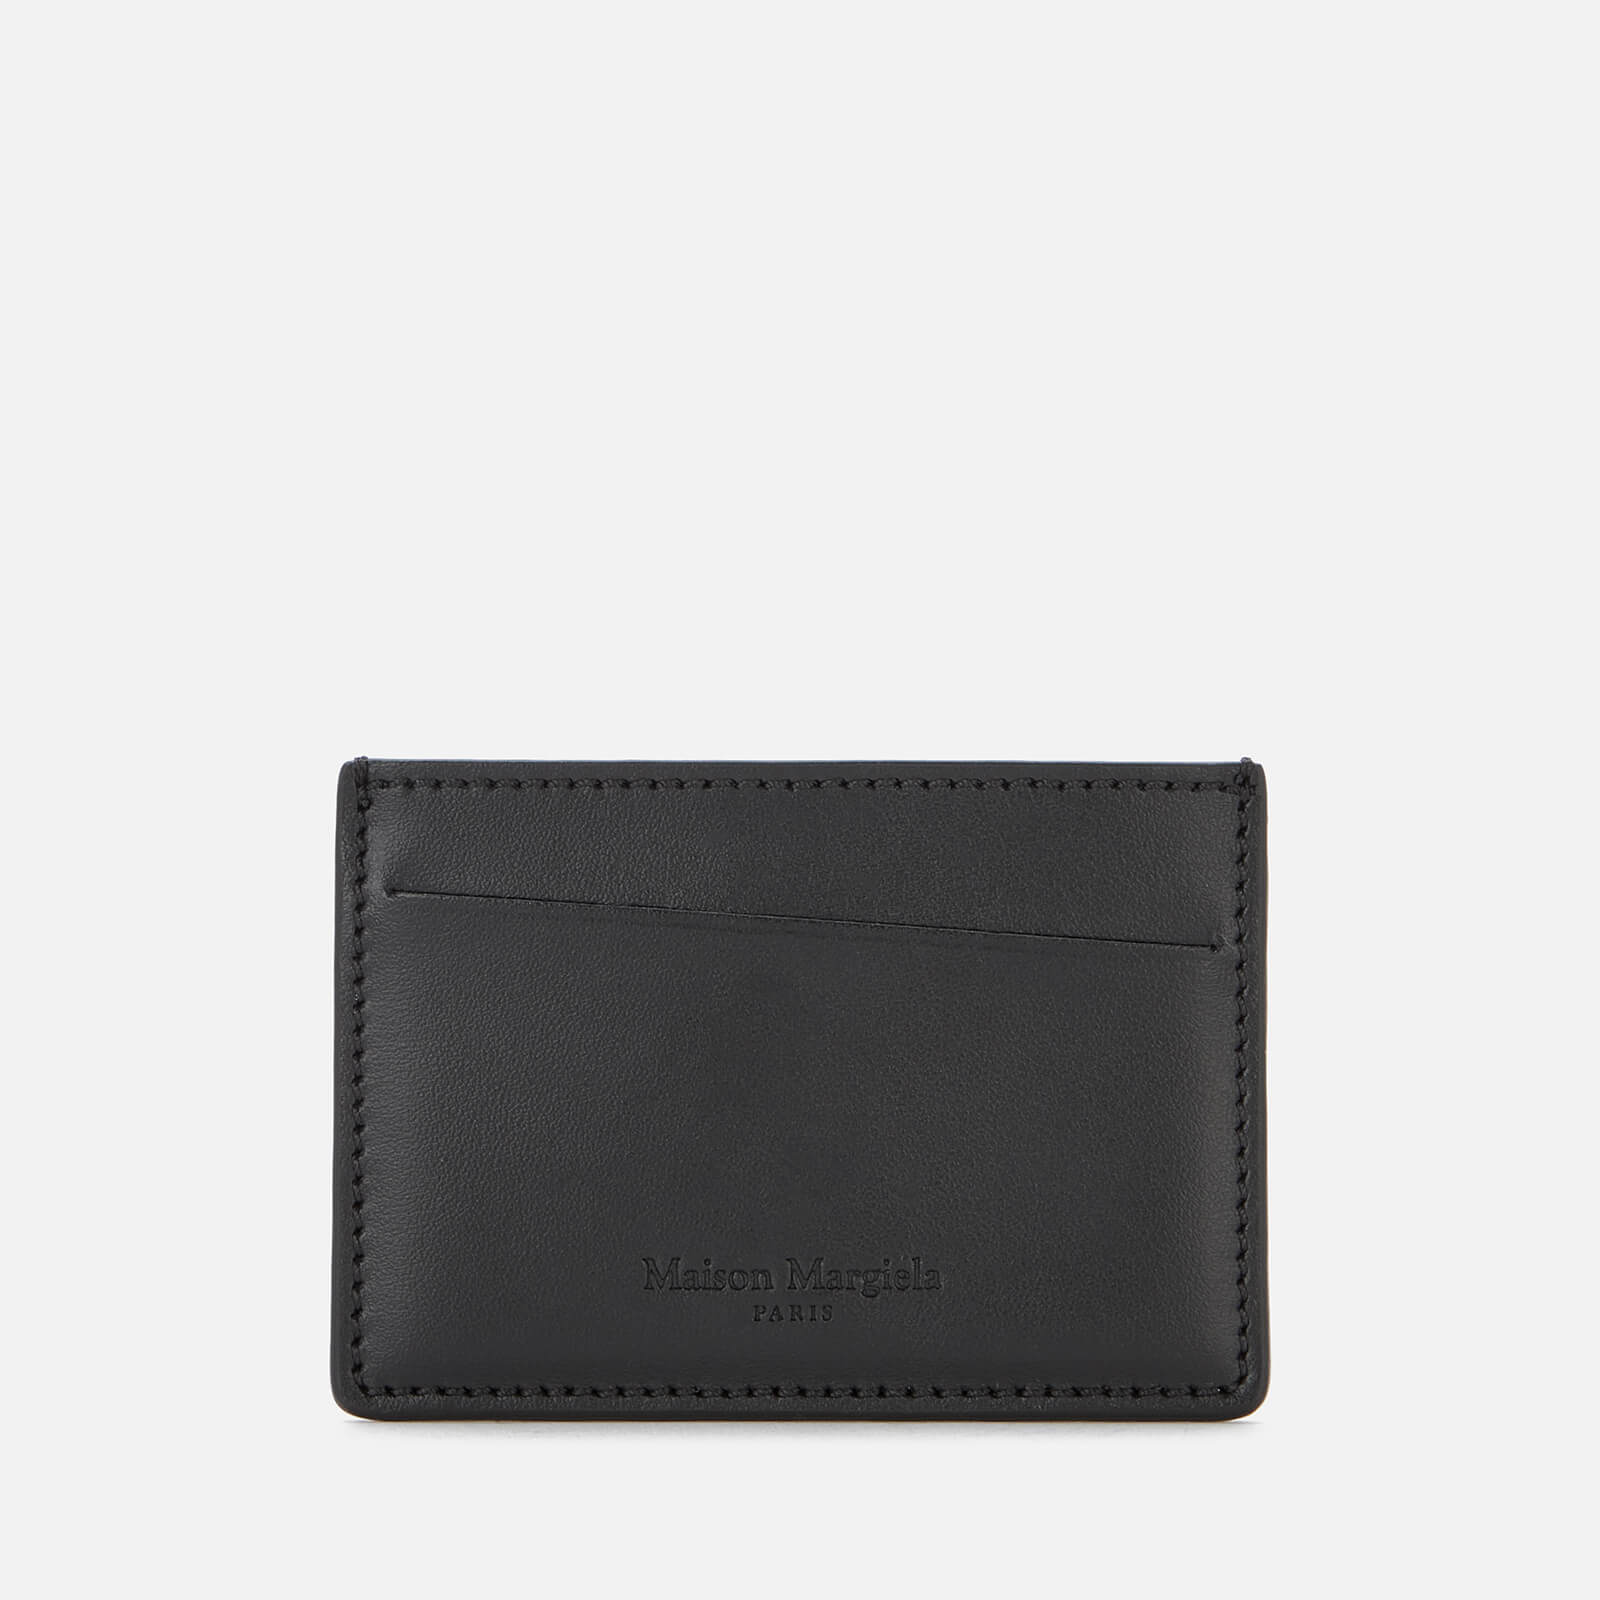 Maison Margiela Men's 3 Card Credit Card Case - Silver